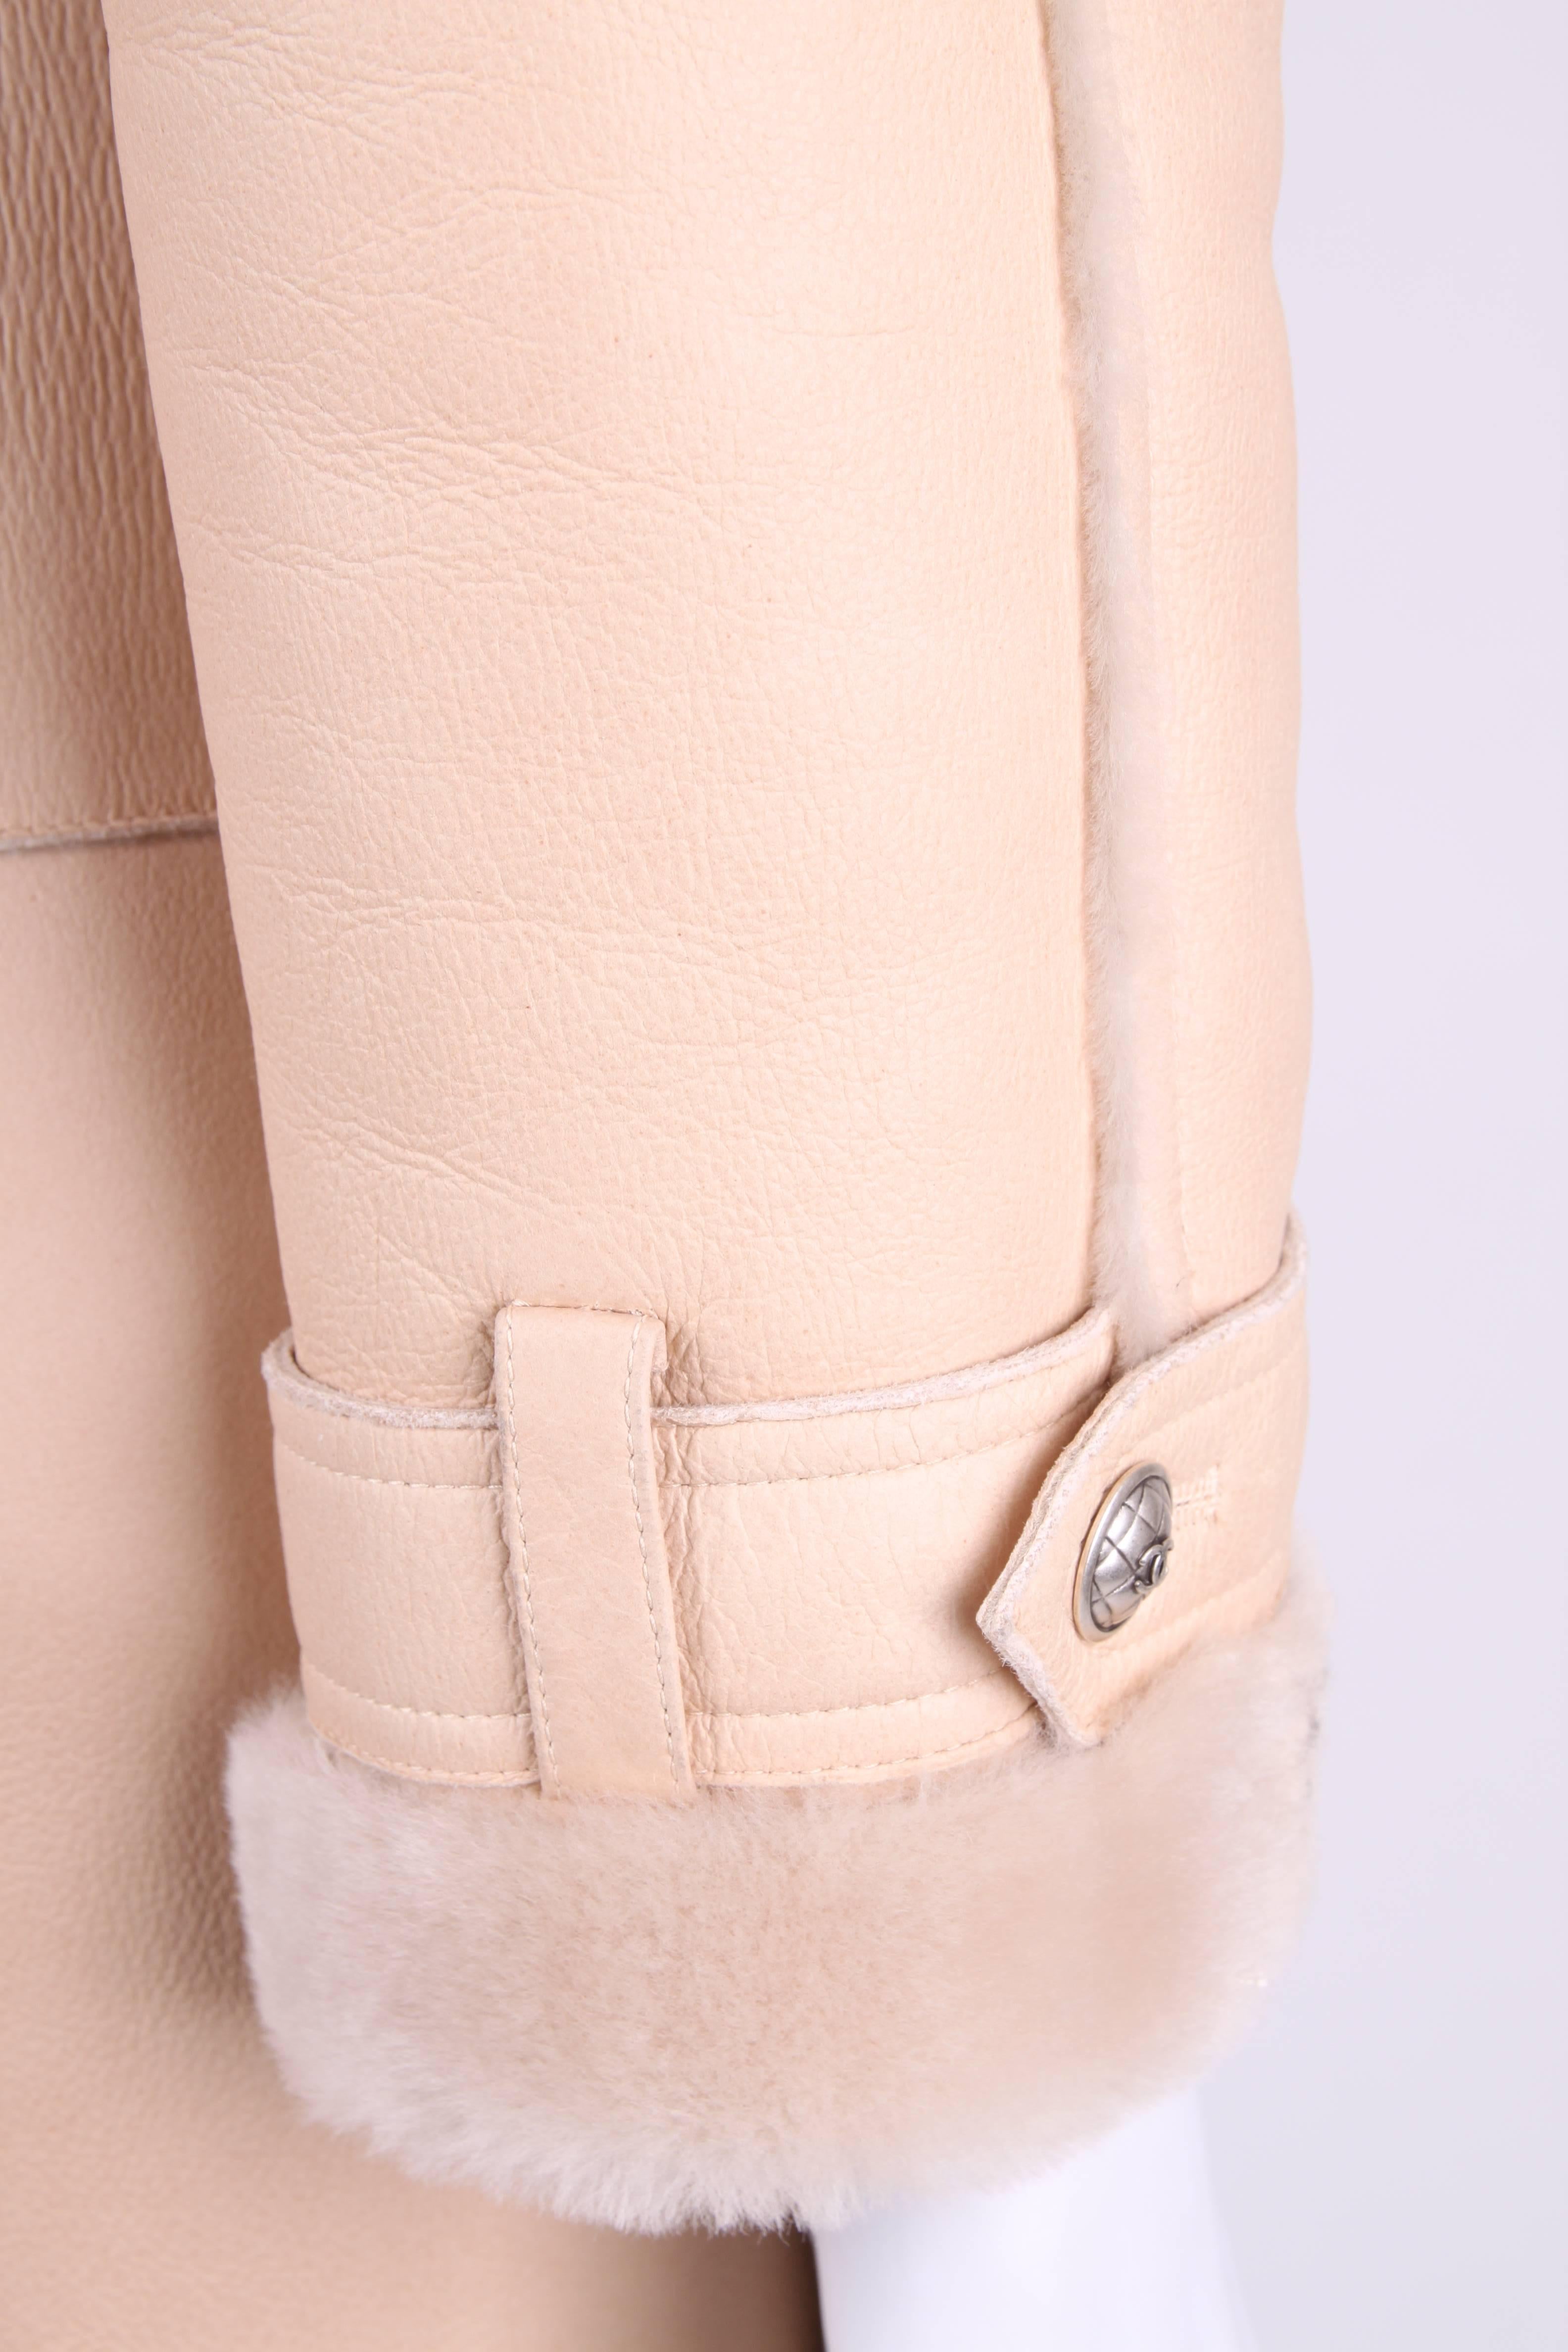 Chanel Trenchcoat - beige lambskin leather 3